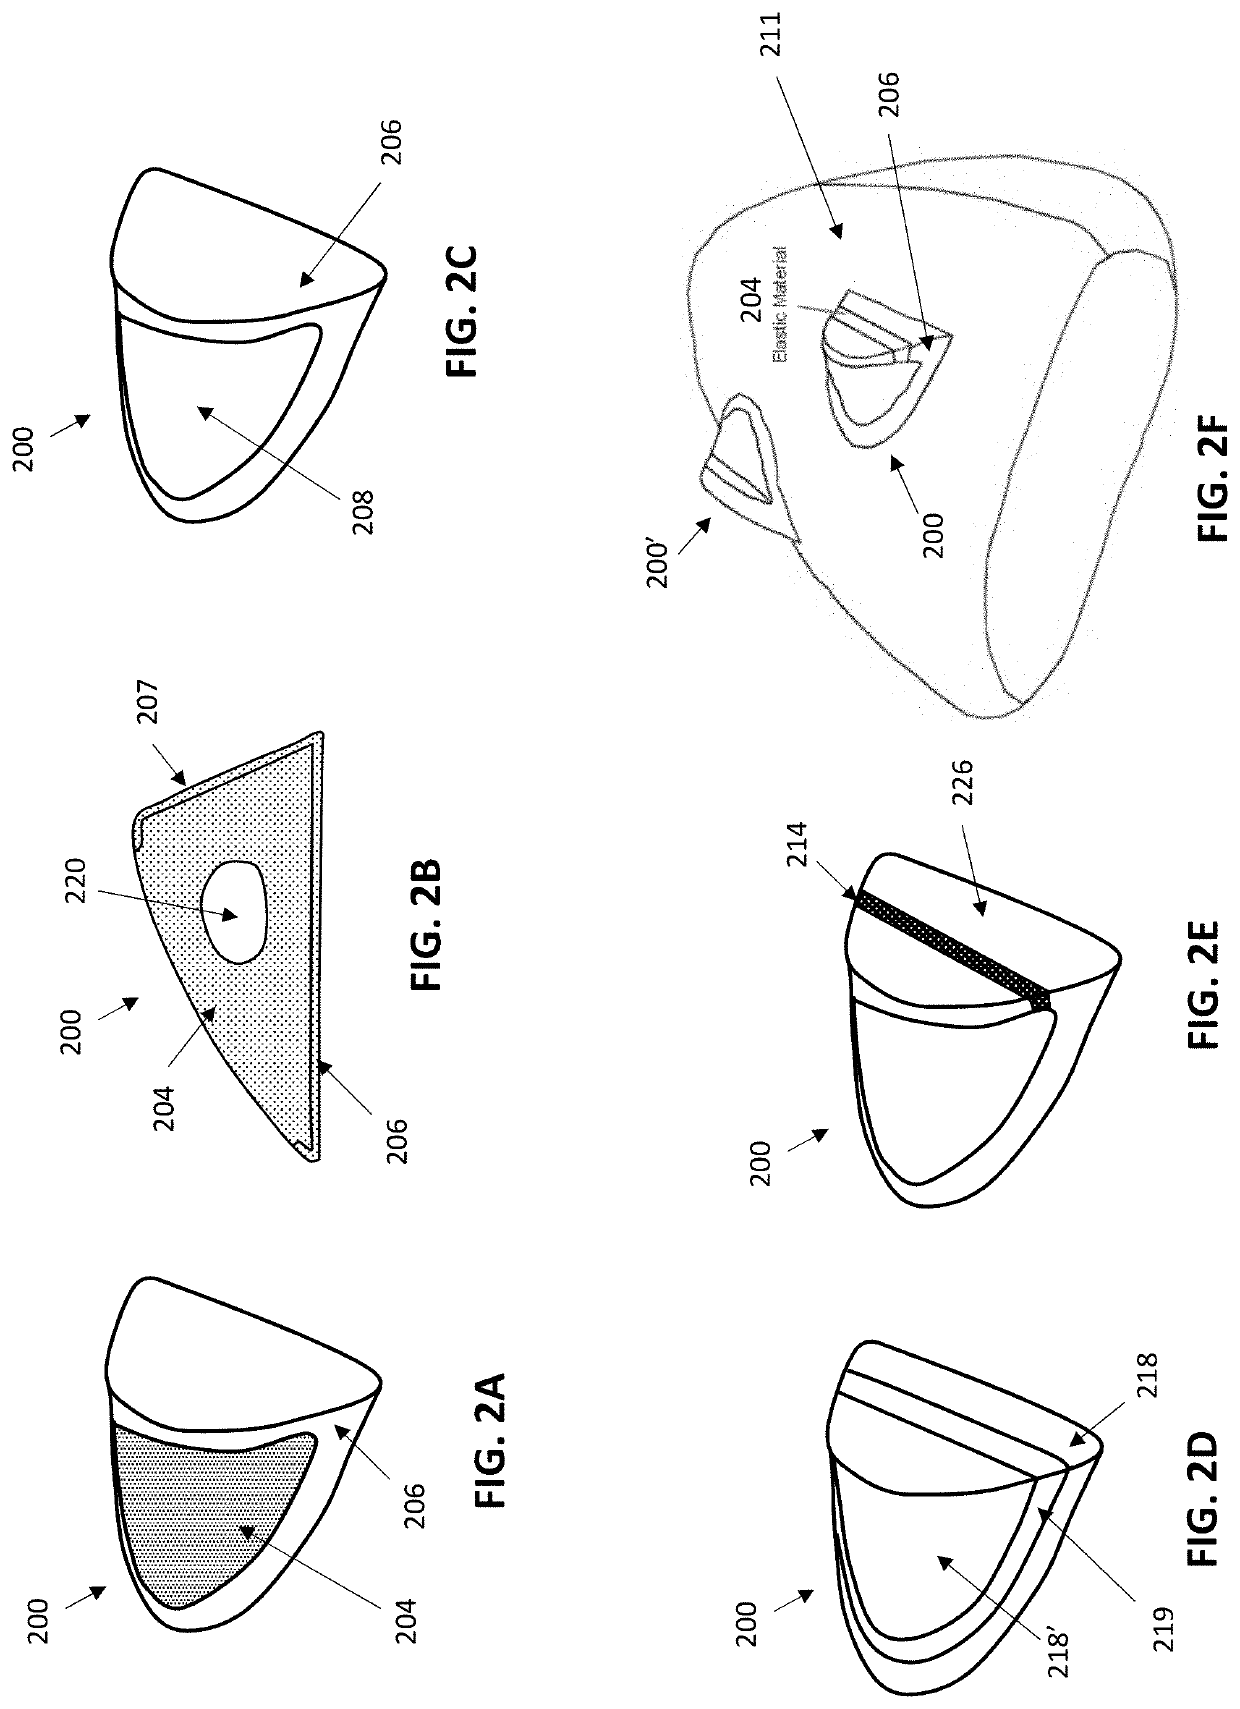 Dental attachment placement structure